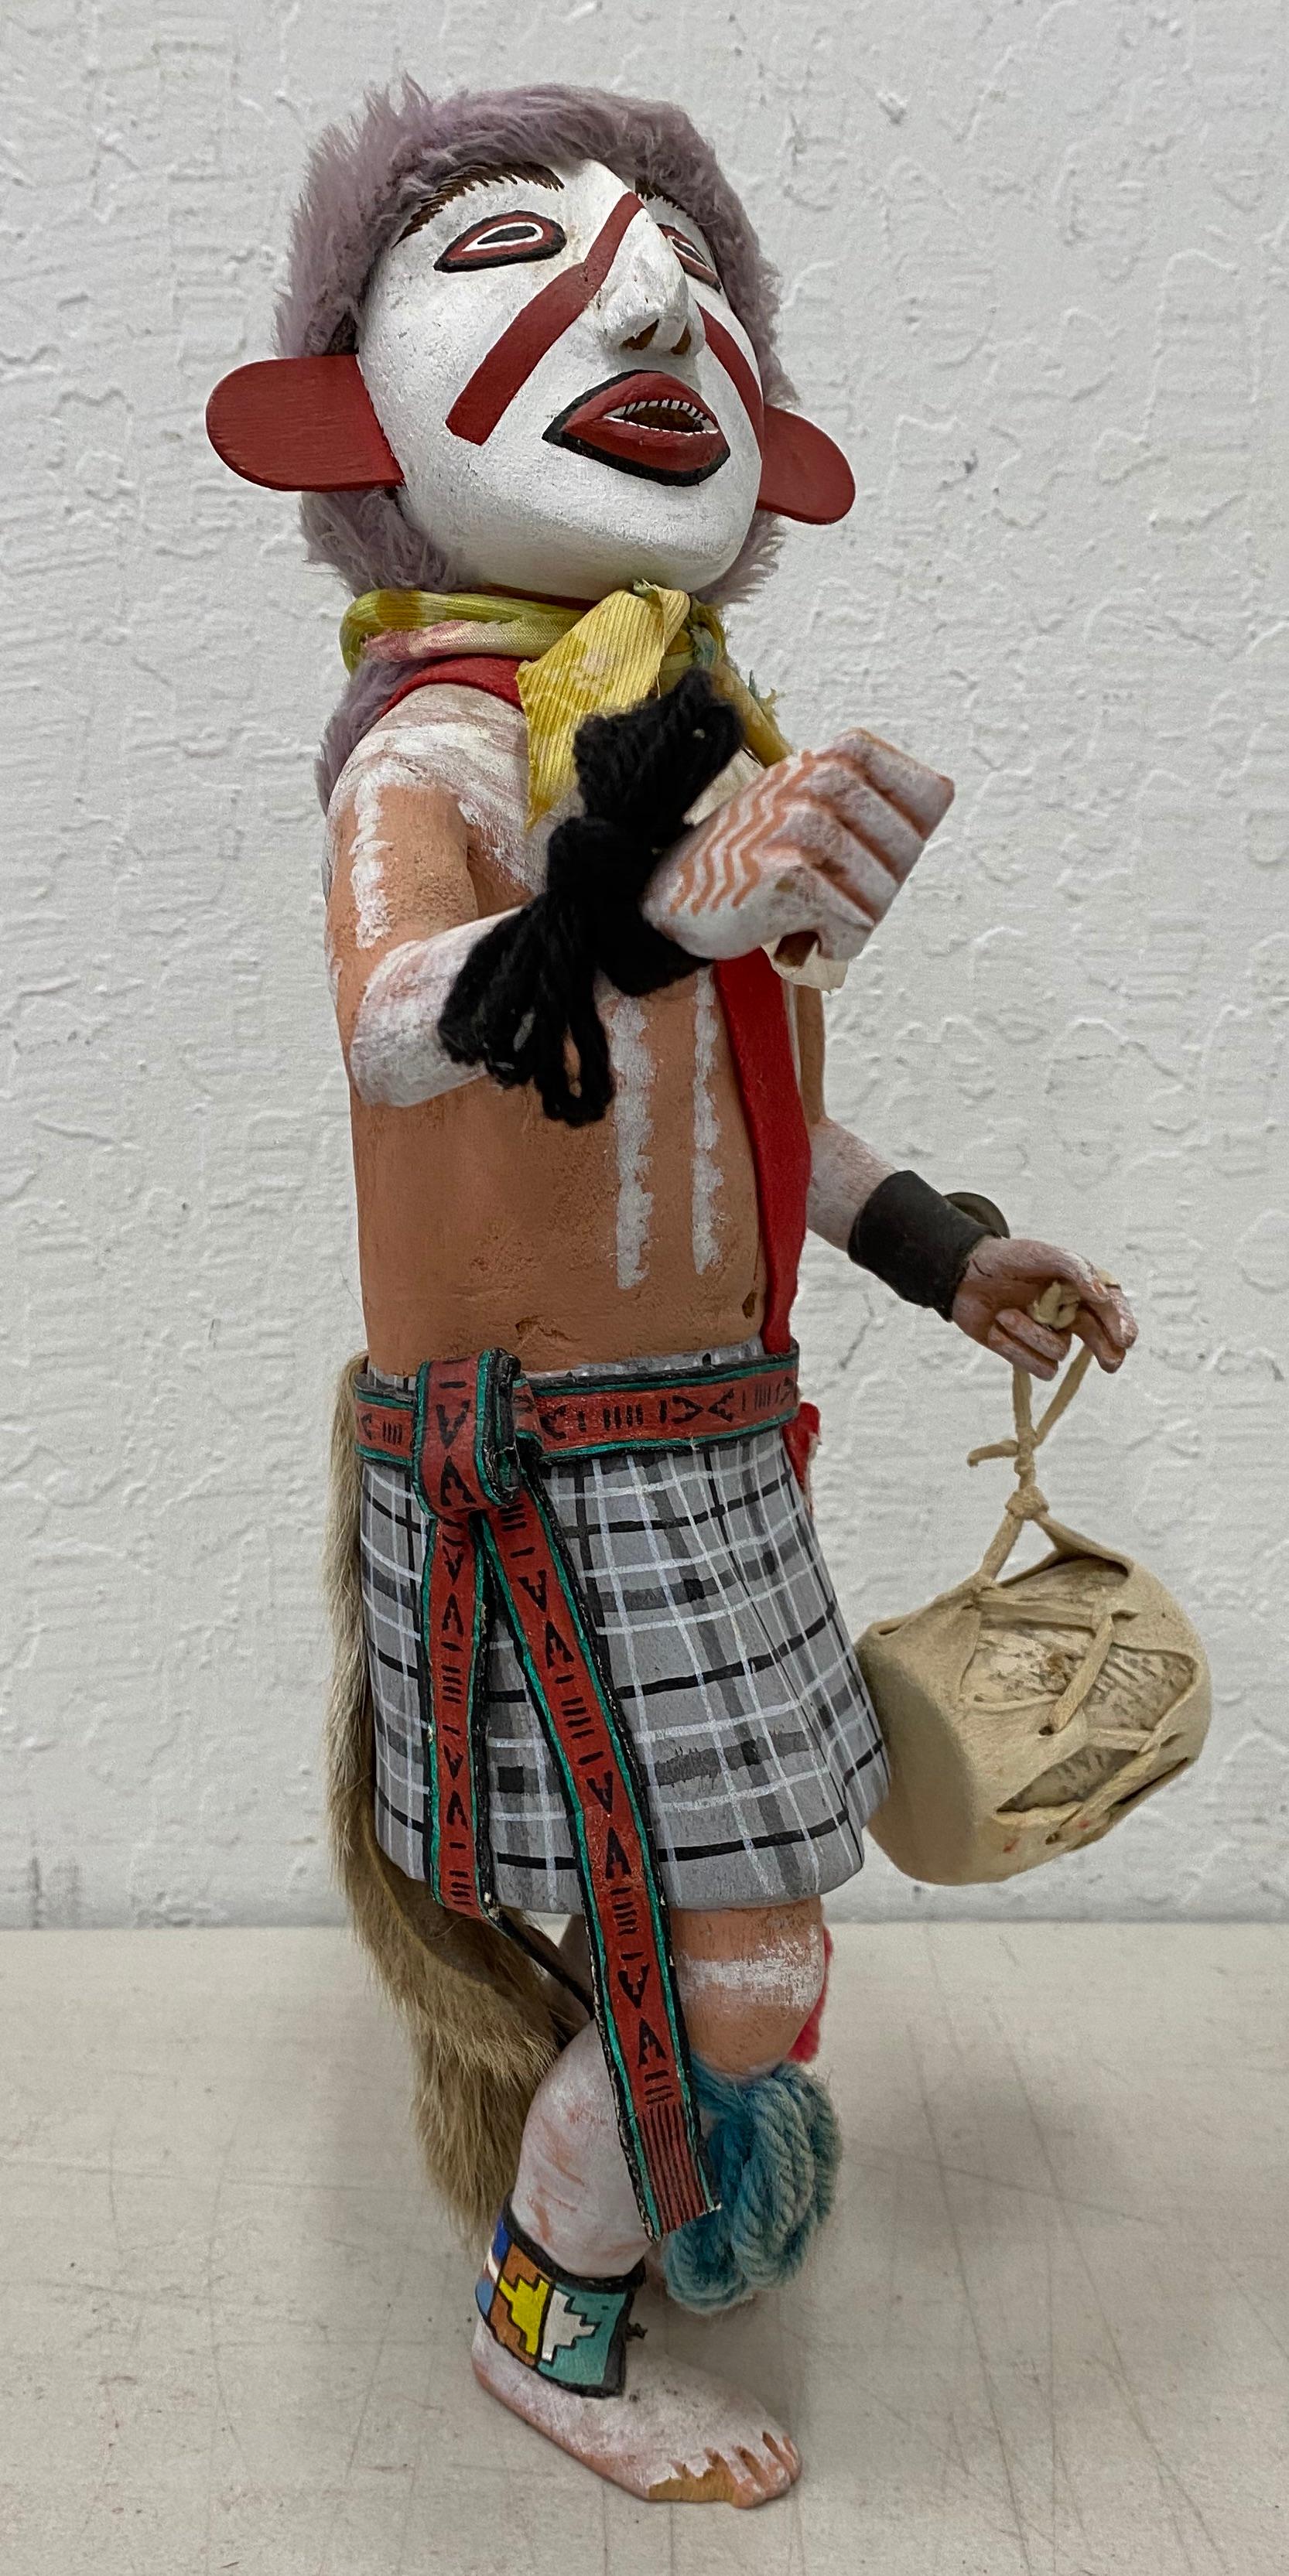 Vintage 1970s Hopi Katsina Figure - Kachina Doll, circa 1970s

Measures: 7